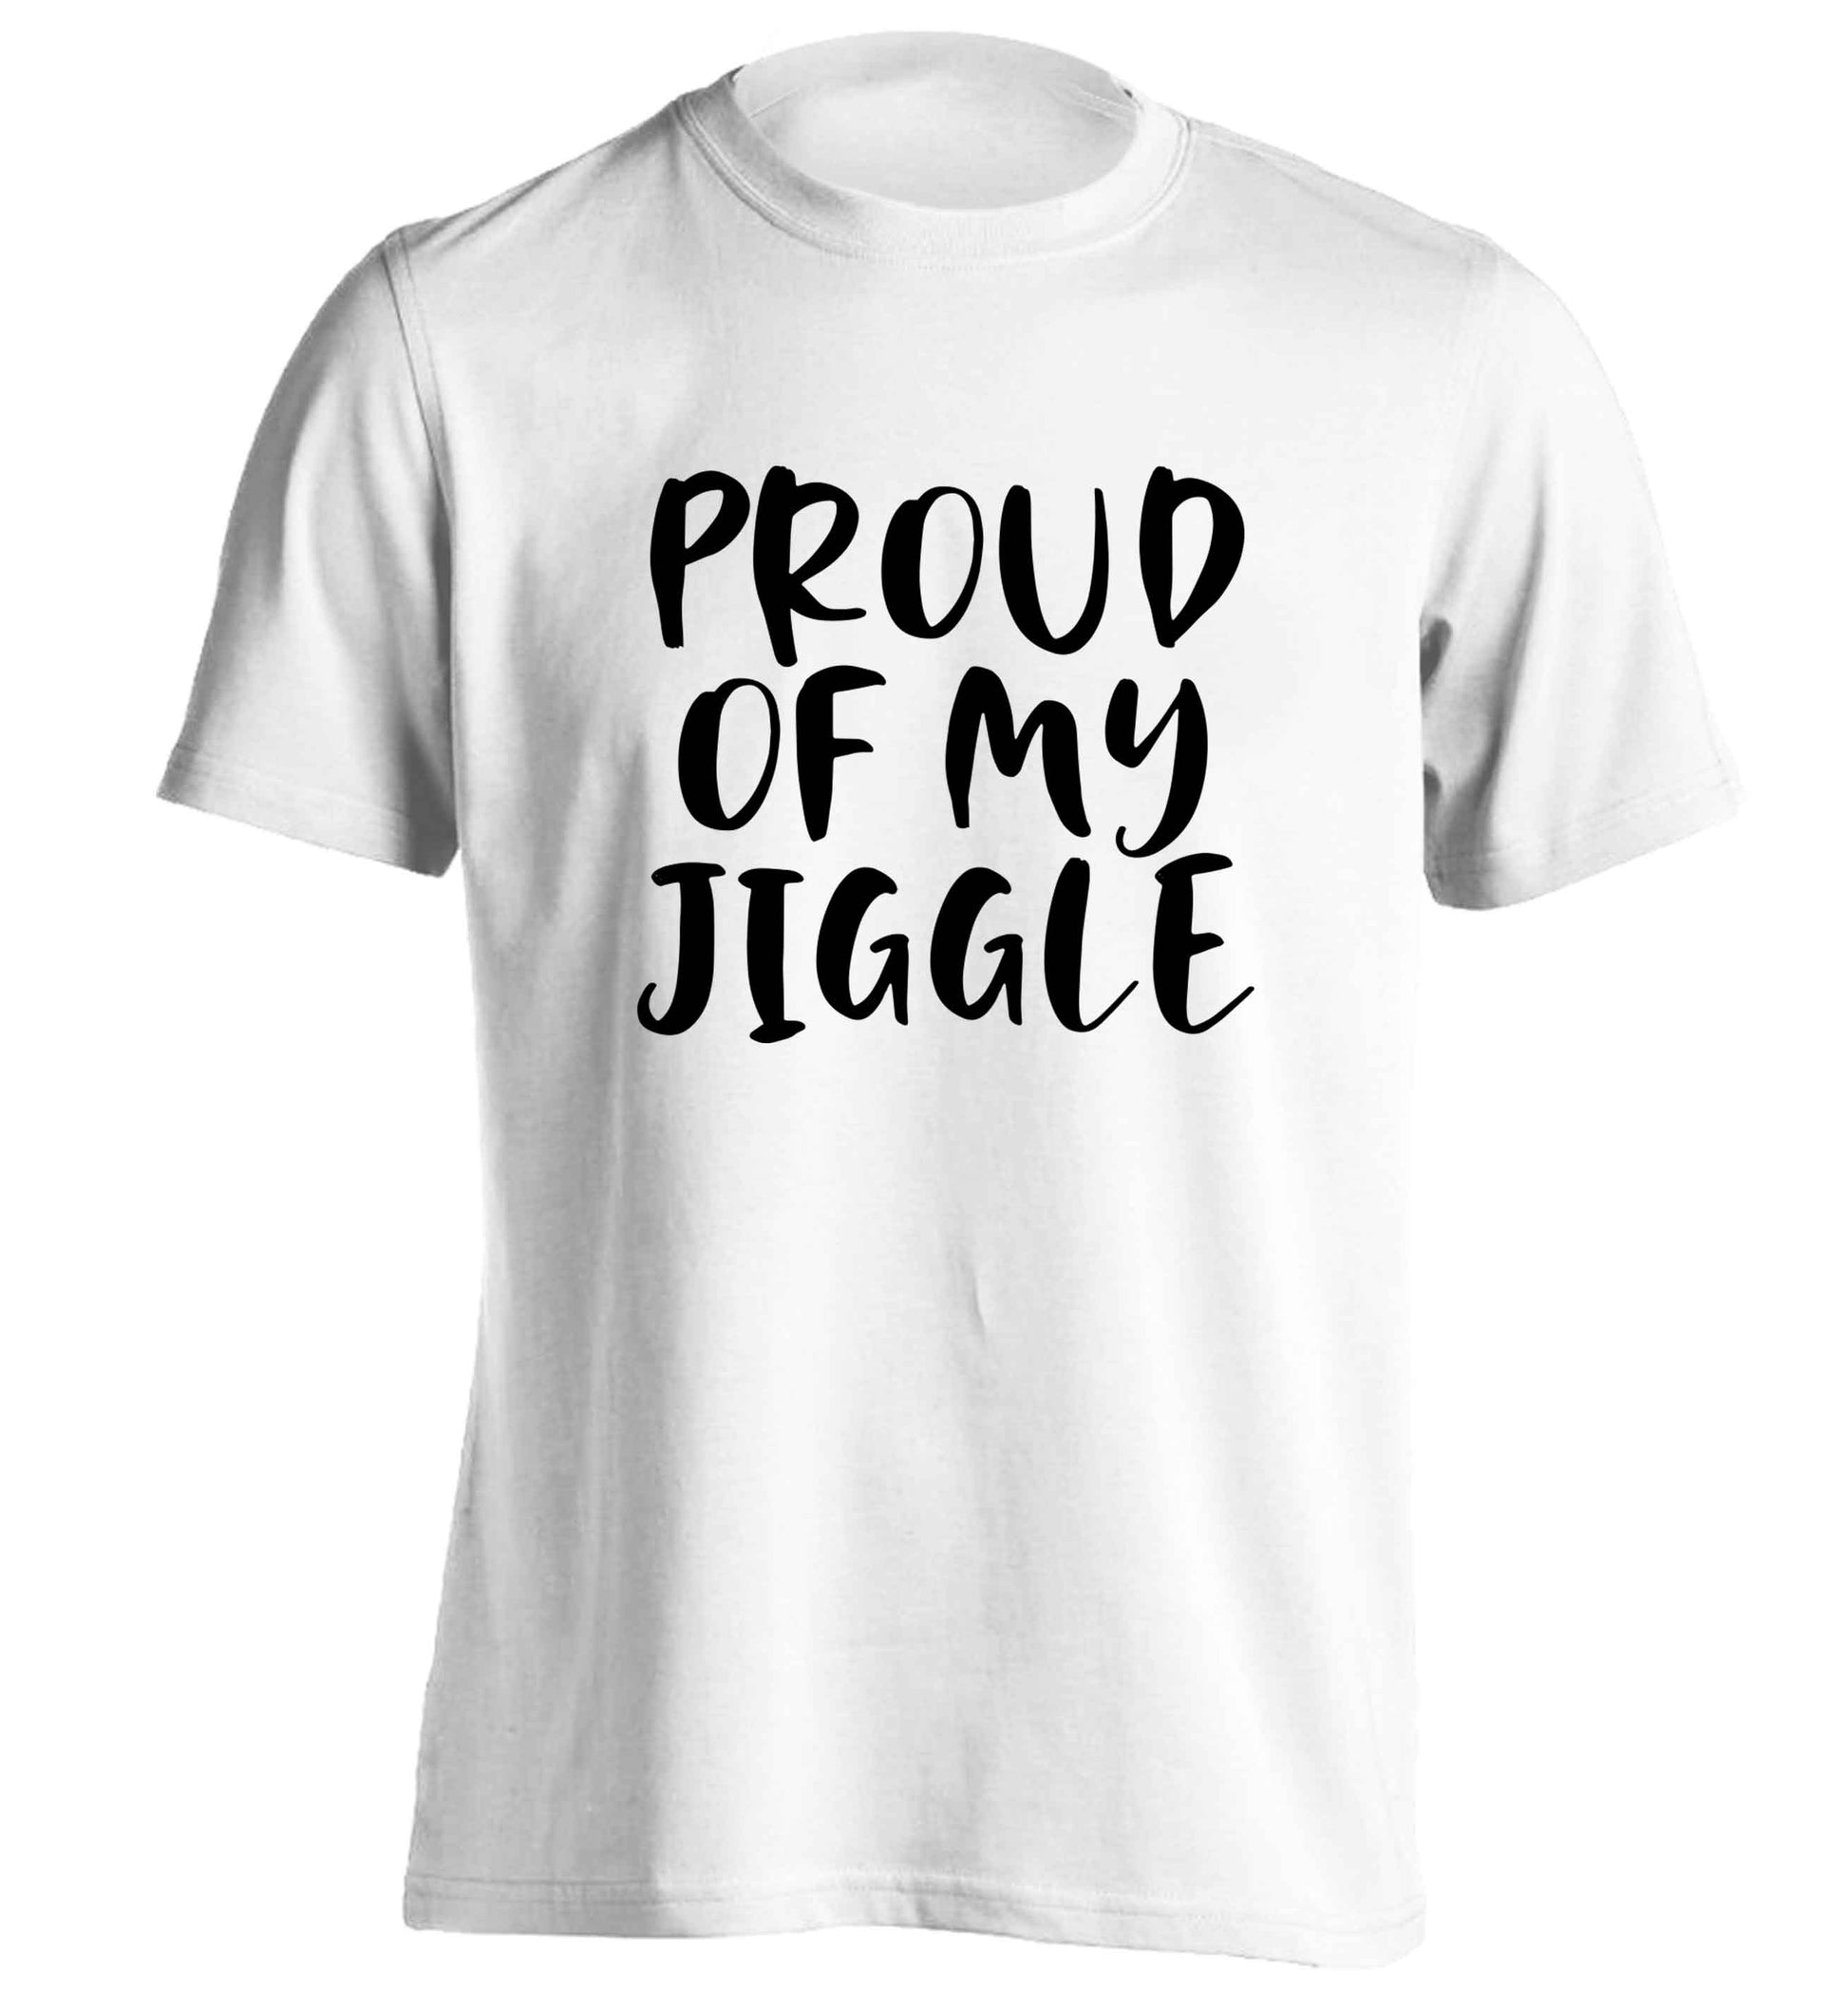 Proud of my jiggle adults unisex white Tshirt 2XL